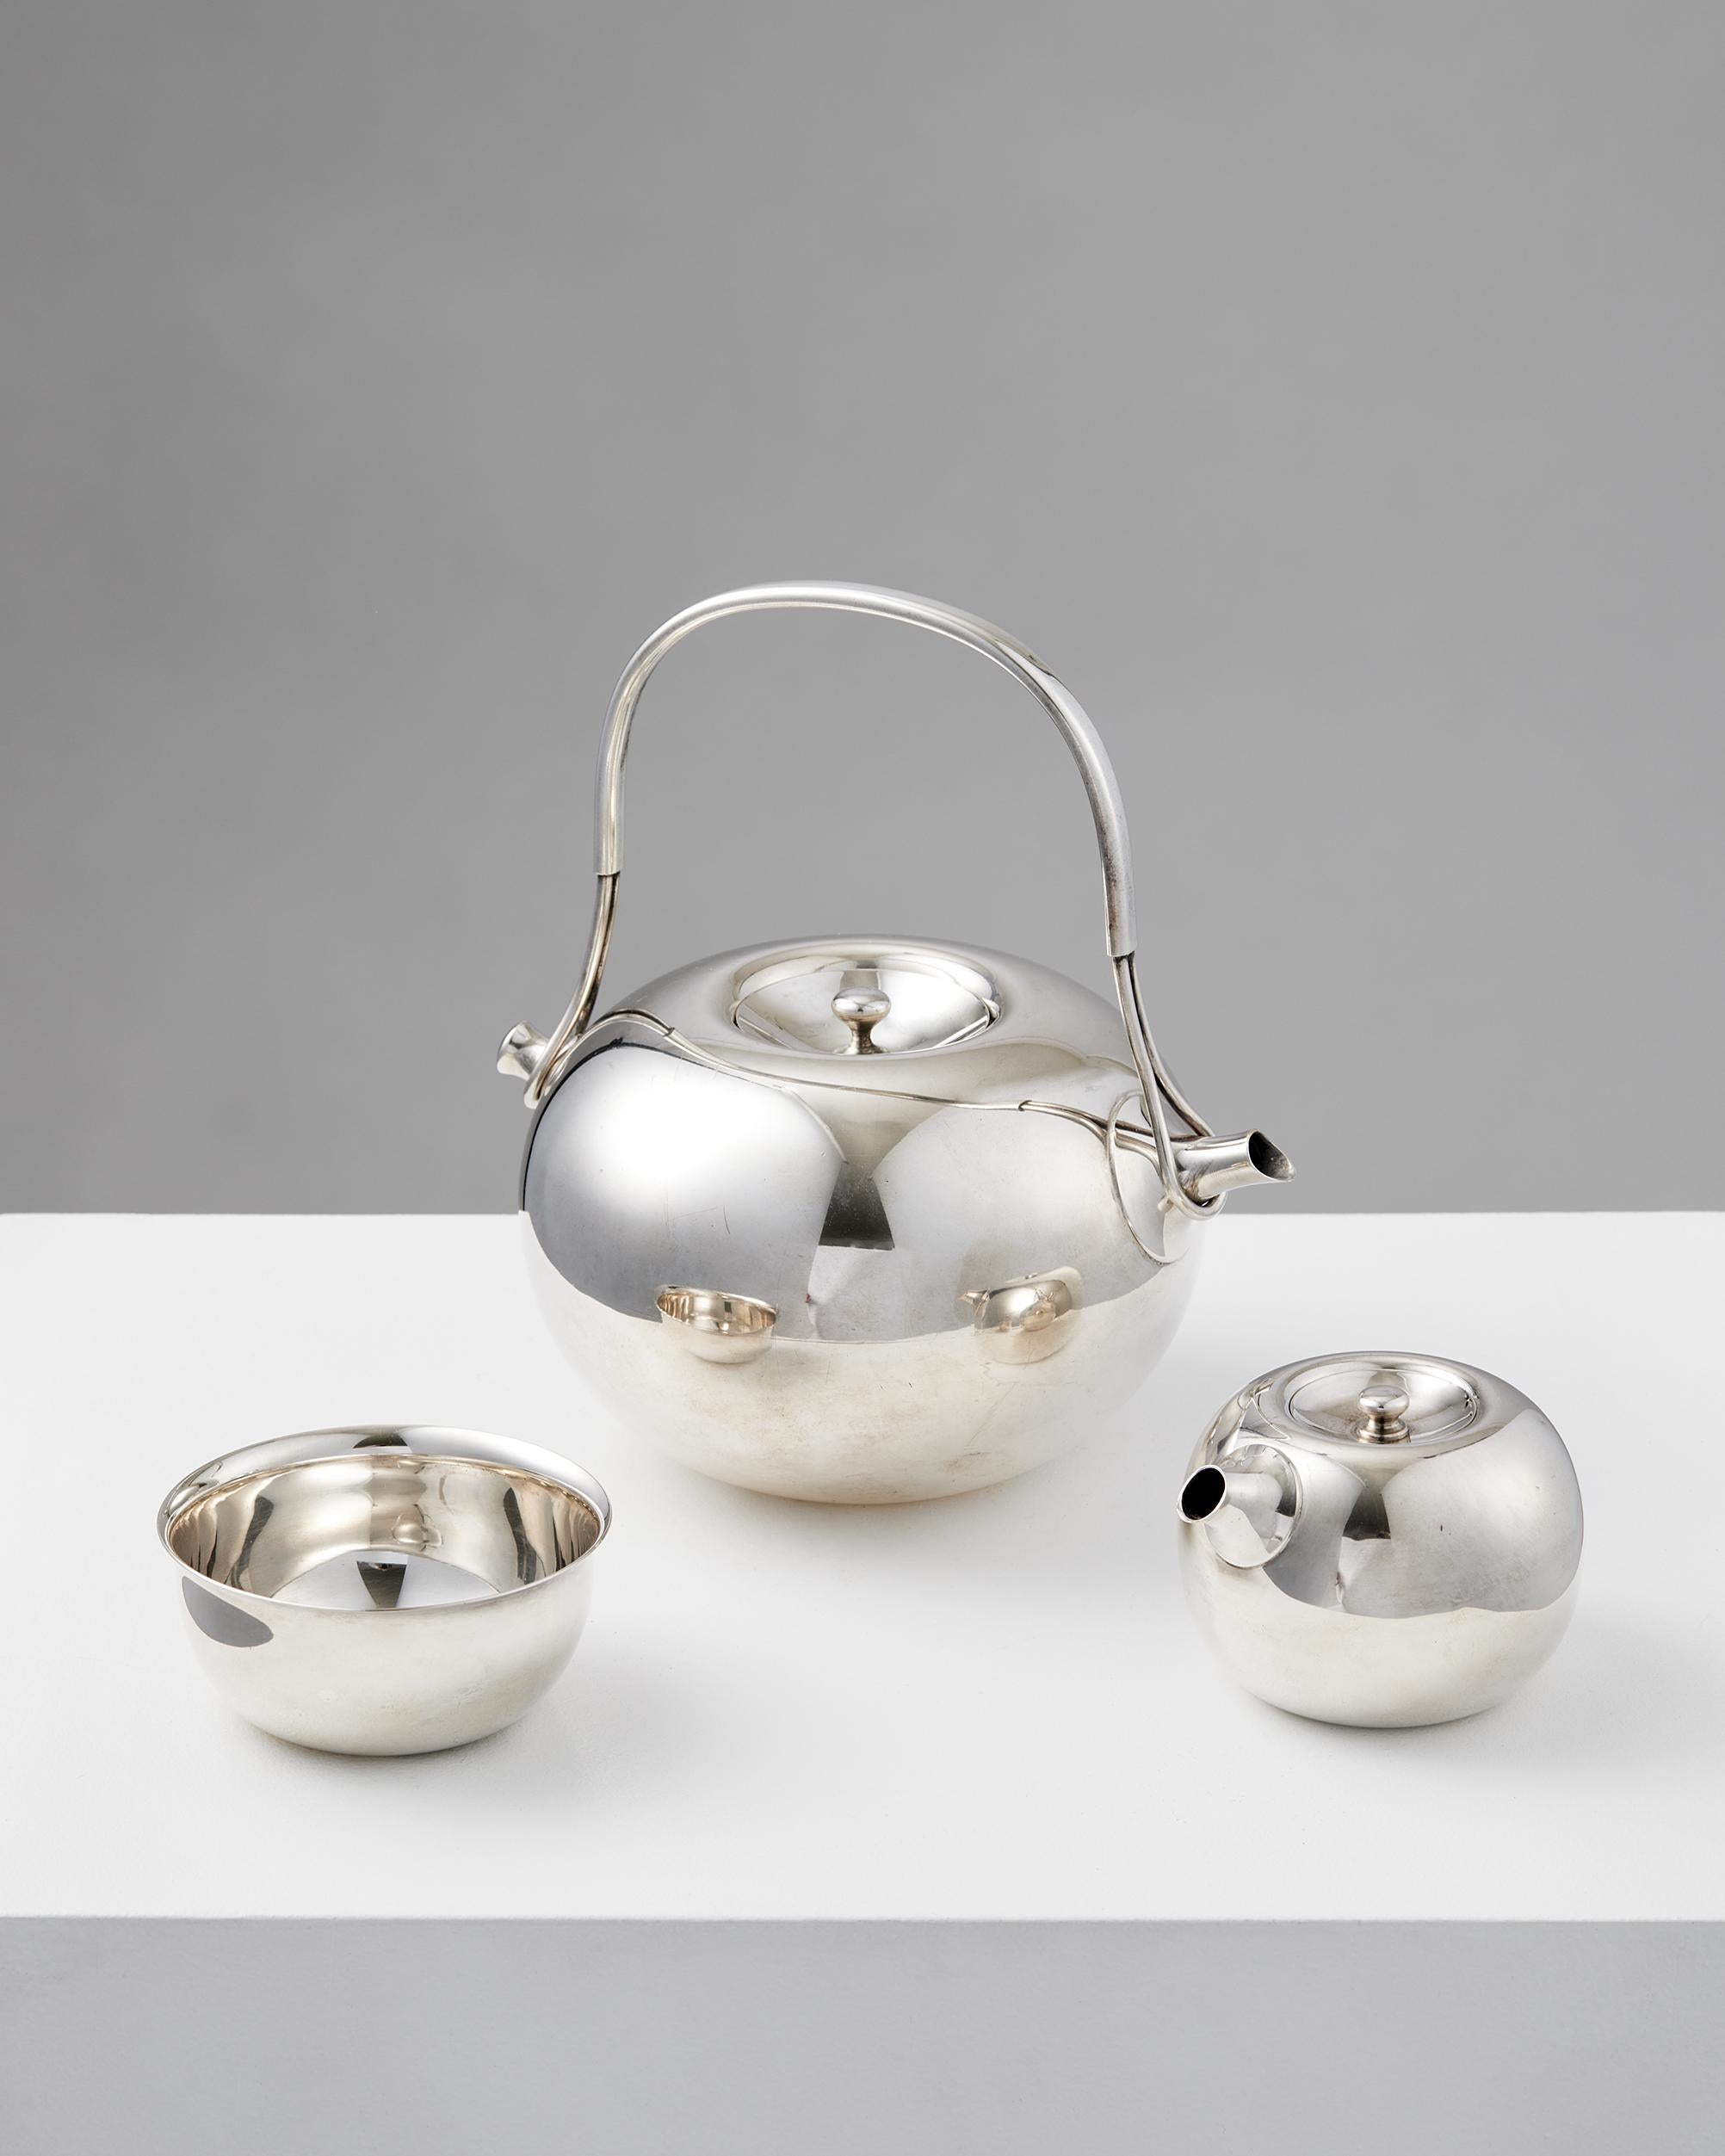 Teaset designed by Vivianna Torun Bülow-Hube for Dansk International Designs Limited,
Denmark, 1964.

Silver-plated brass.

Stamped.

Teapot:
H: 21 cm / 8 1/4''
Diameter: 20 cm / 8''

Small teapot:
H: 7.5 cm /3''
Diameter: 8.5 cm / 3 1/4''

Bowl:
H: